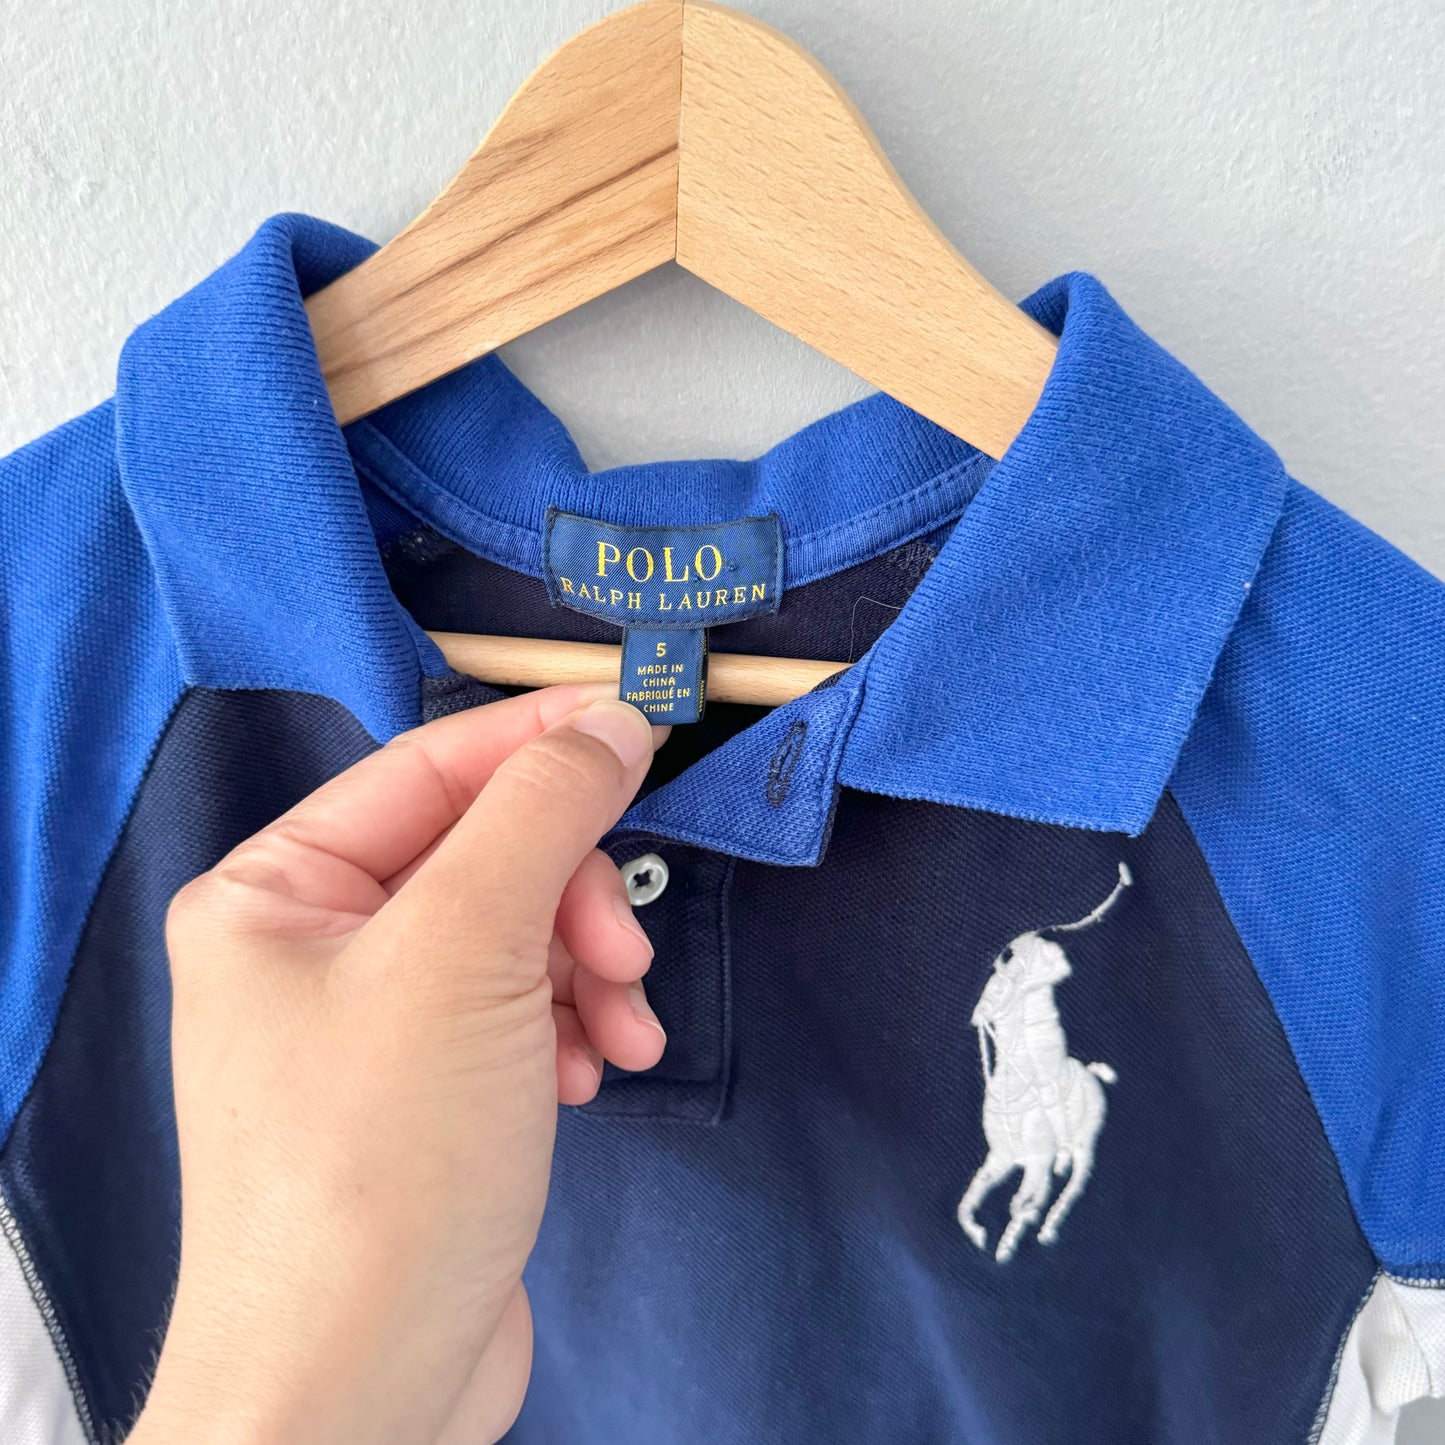 Polo Ralph Lauren / Navy, blue, white polo shirt / 5Y